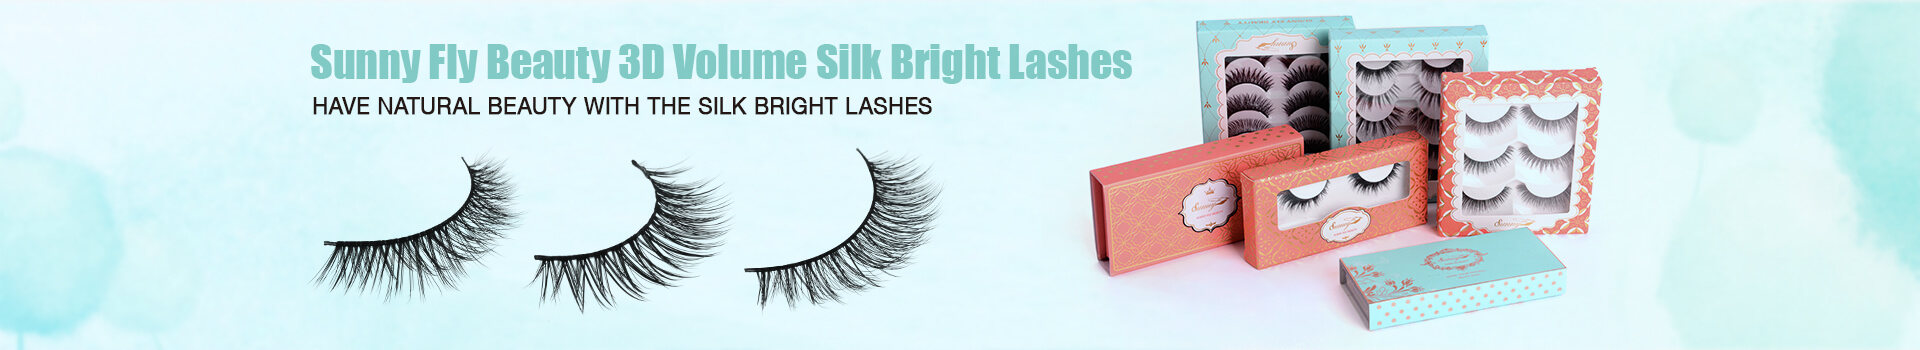 3D Volume Silk Bright Eyelashes FA17